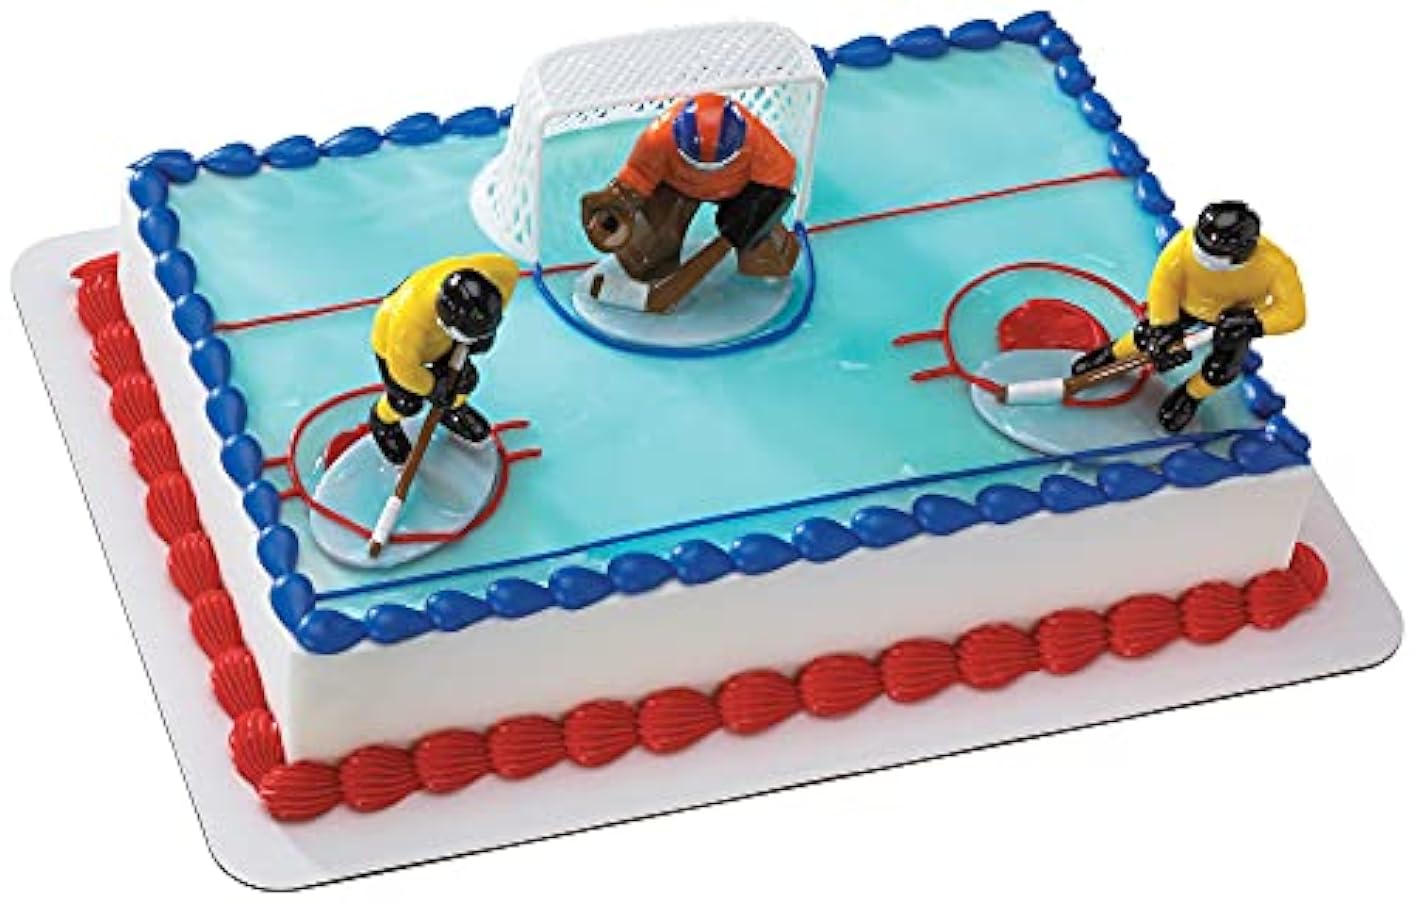 Hockey FaceOff DecoSet Cake Decoration by DecoPac 961482132